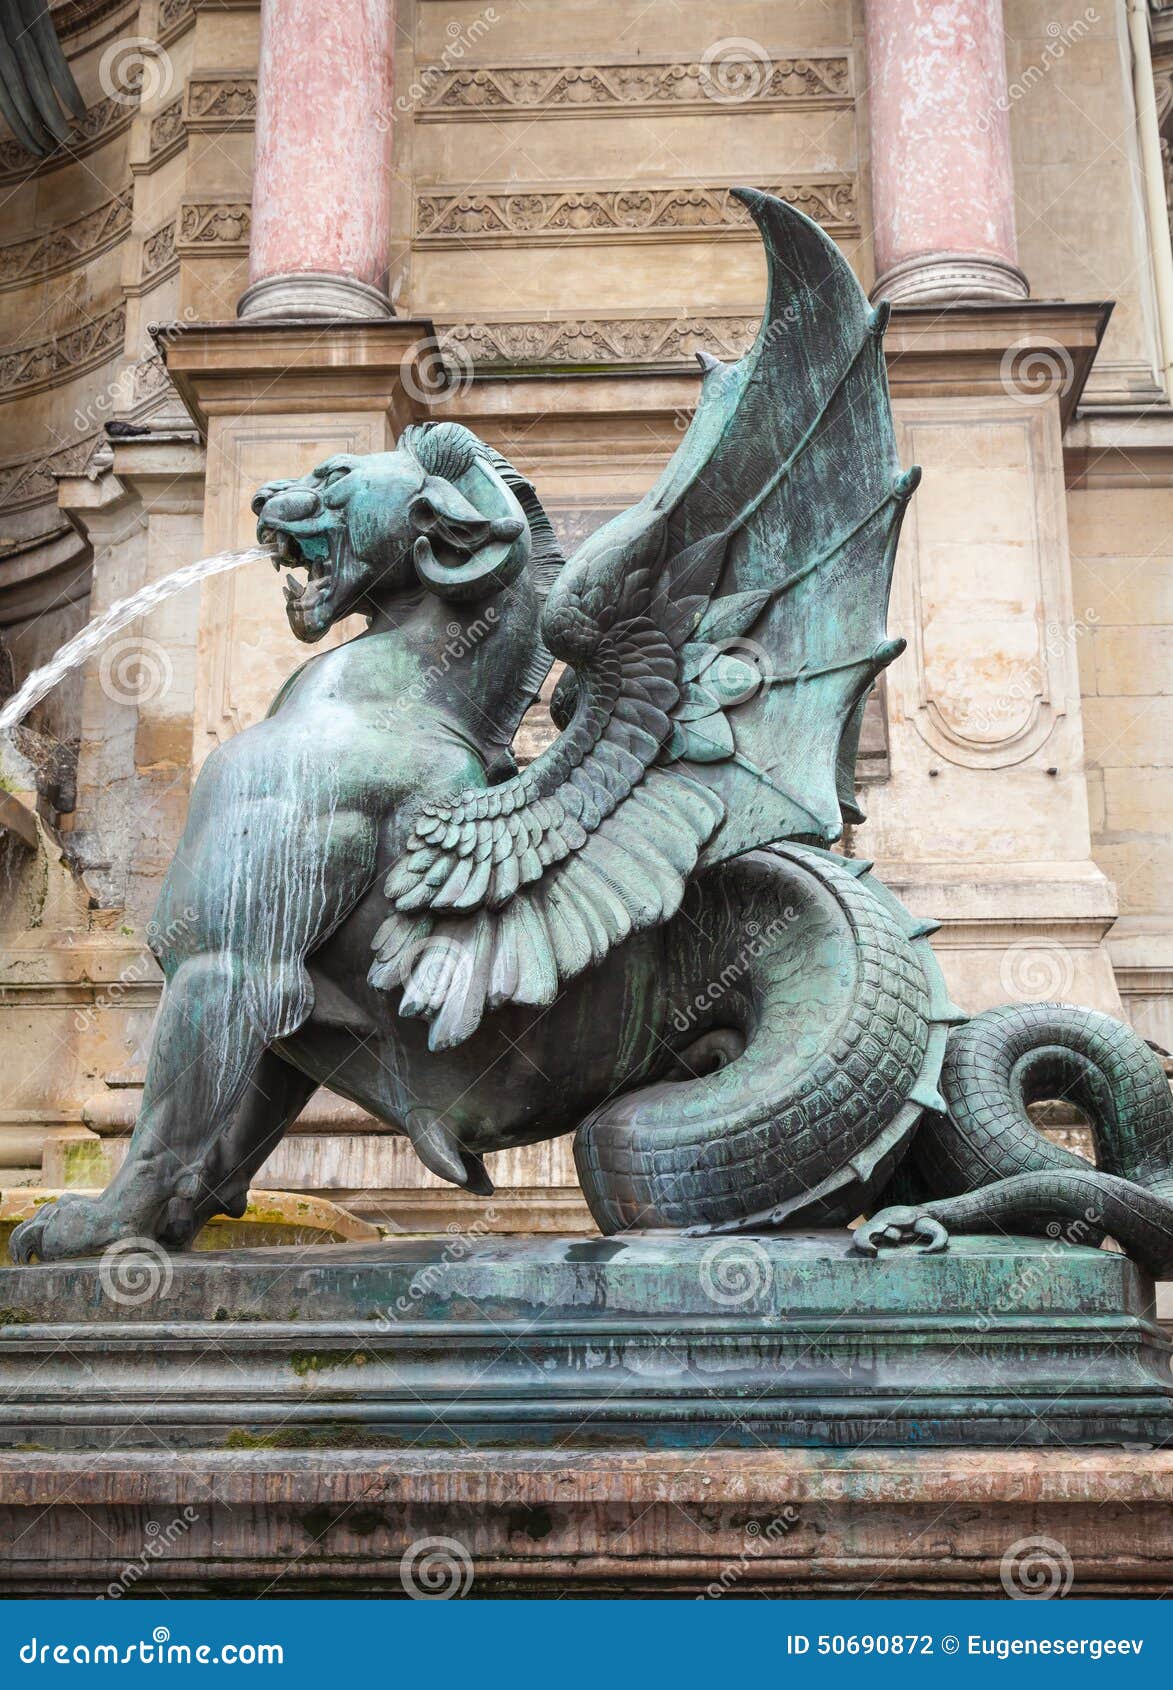 Winged lion, Fontaine Saint-Michel, Paris, France. Popular historical landmark